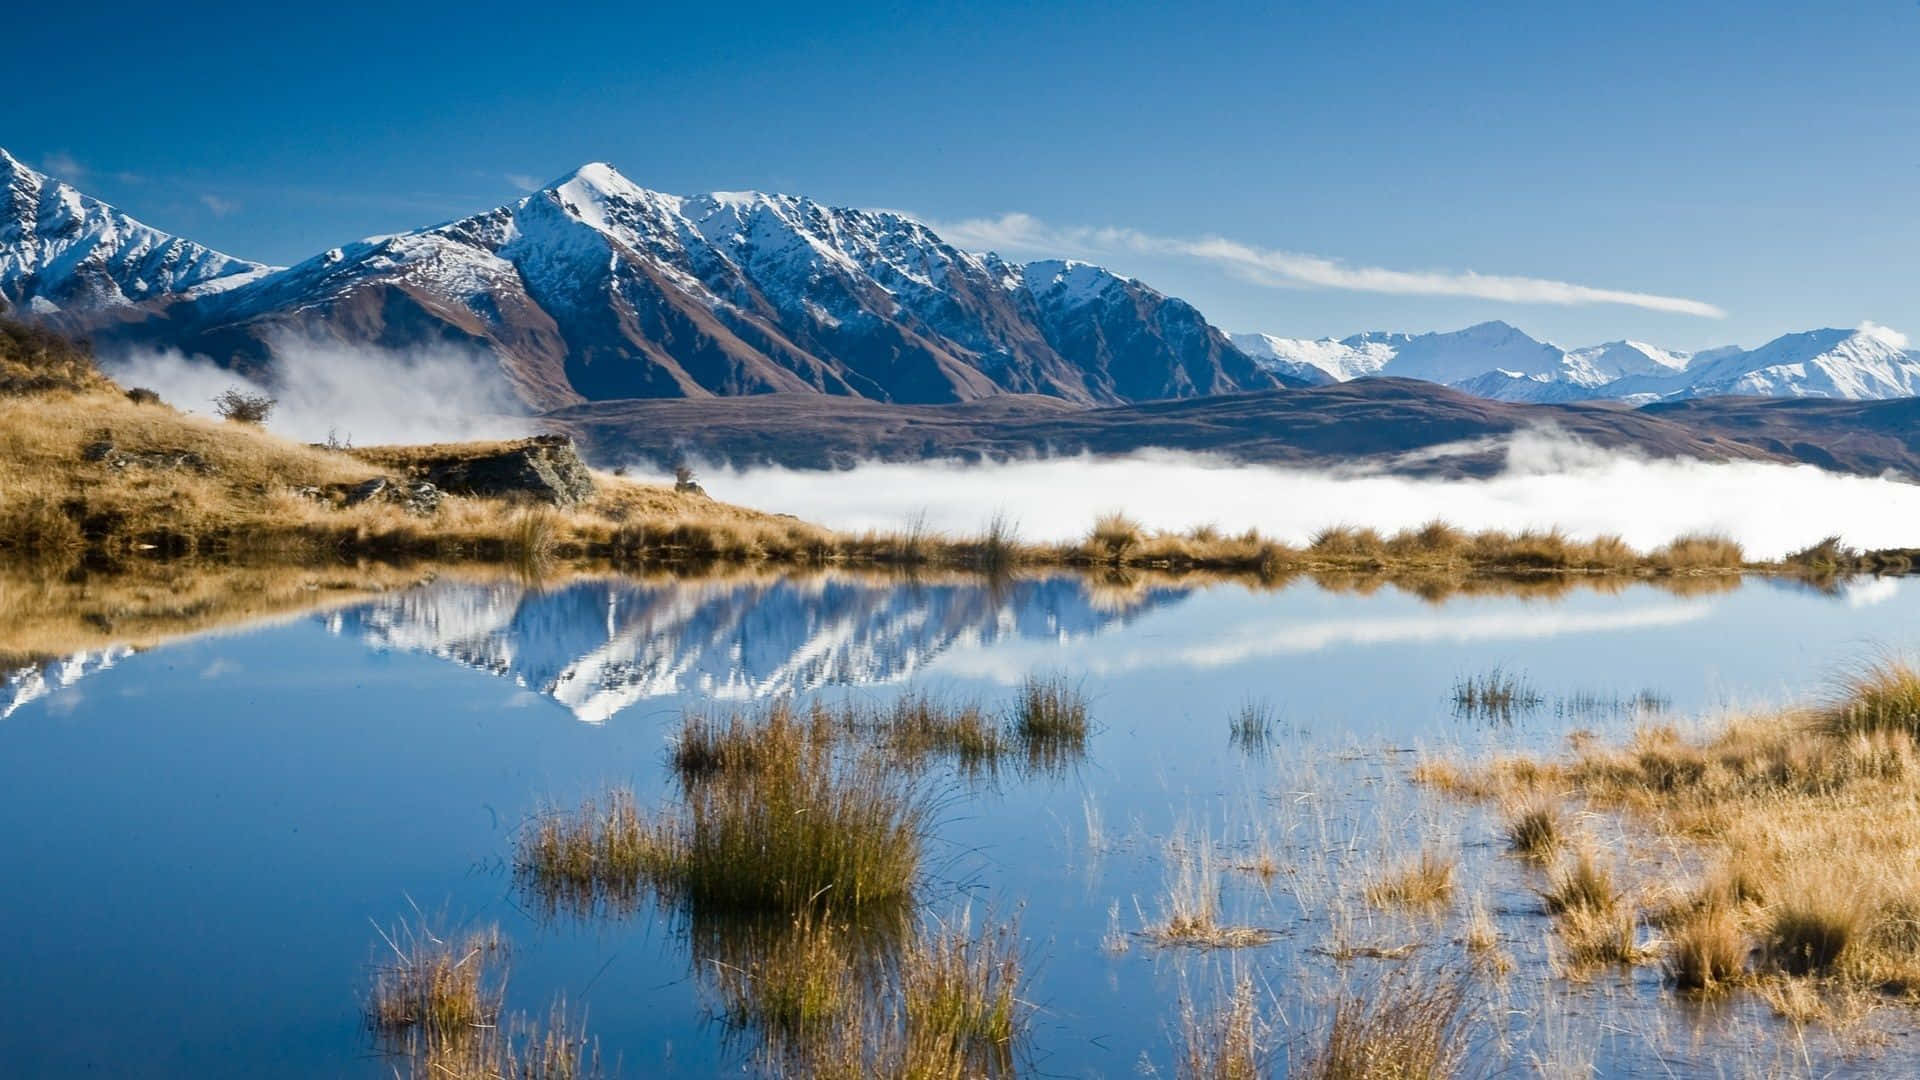 "Enjoying Scenic Views of New Zealand."